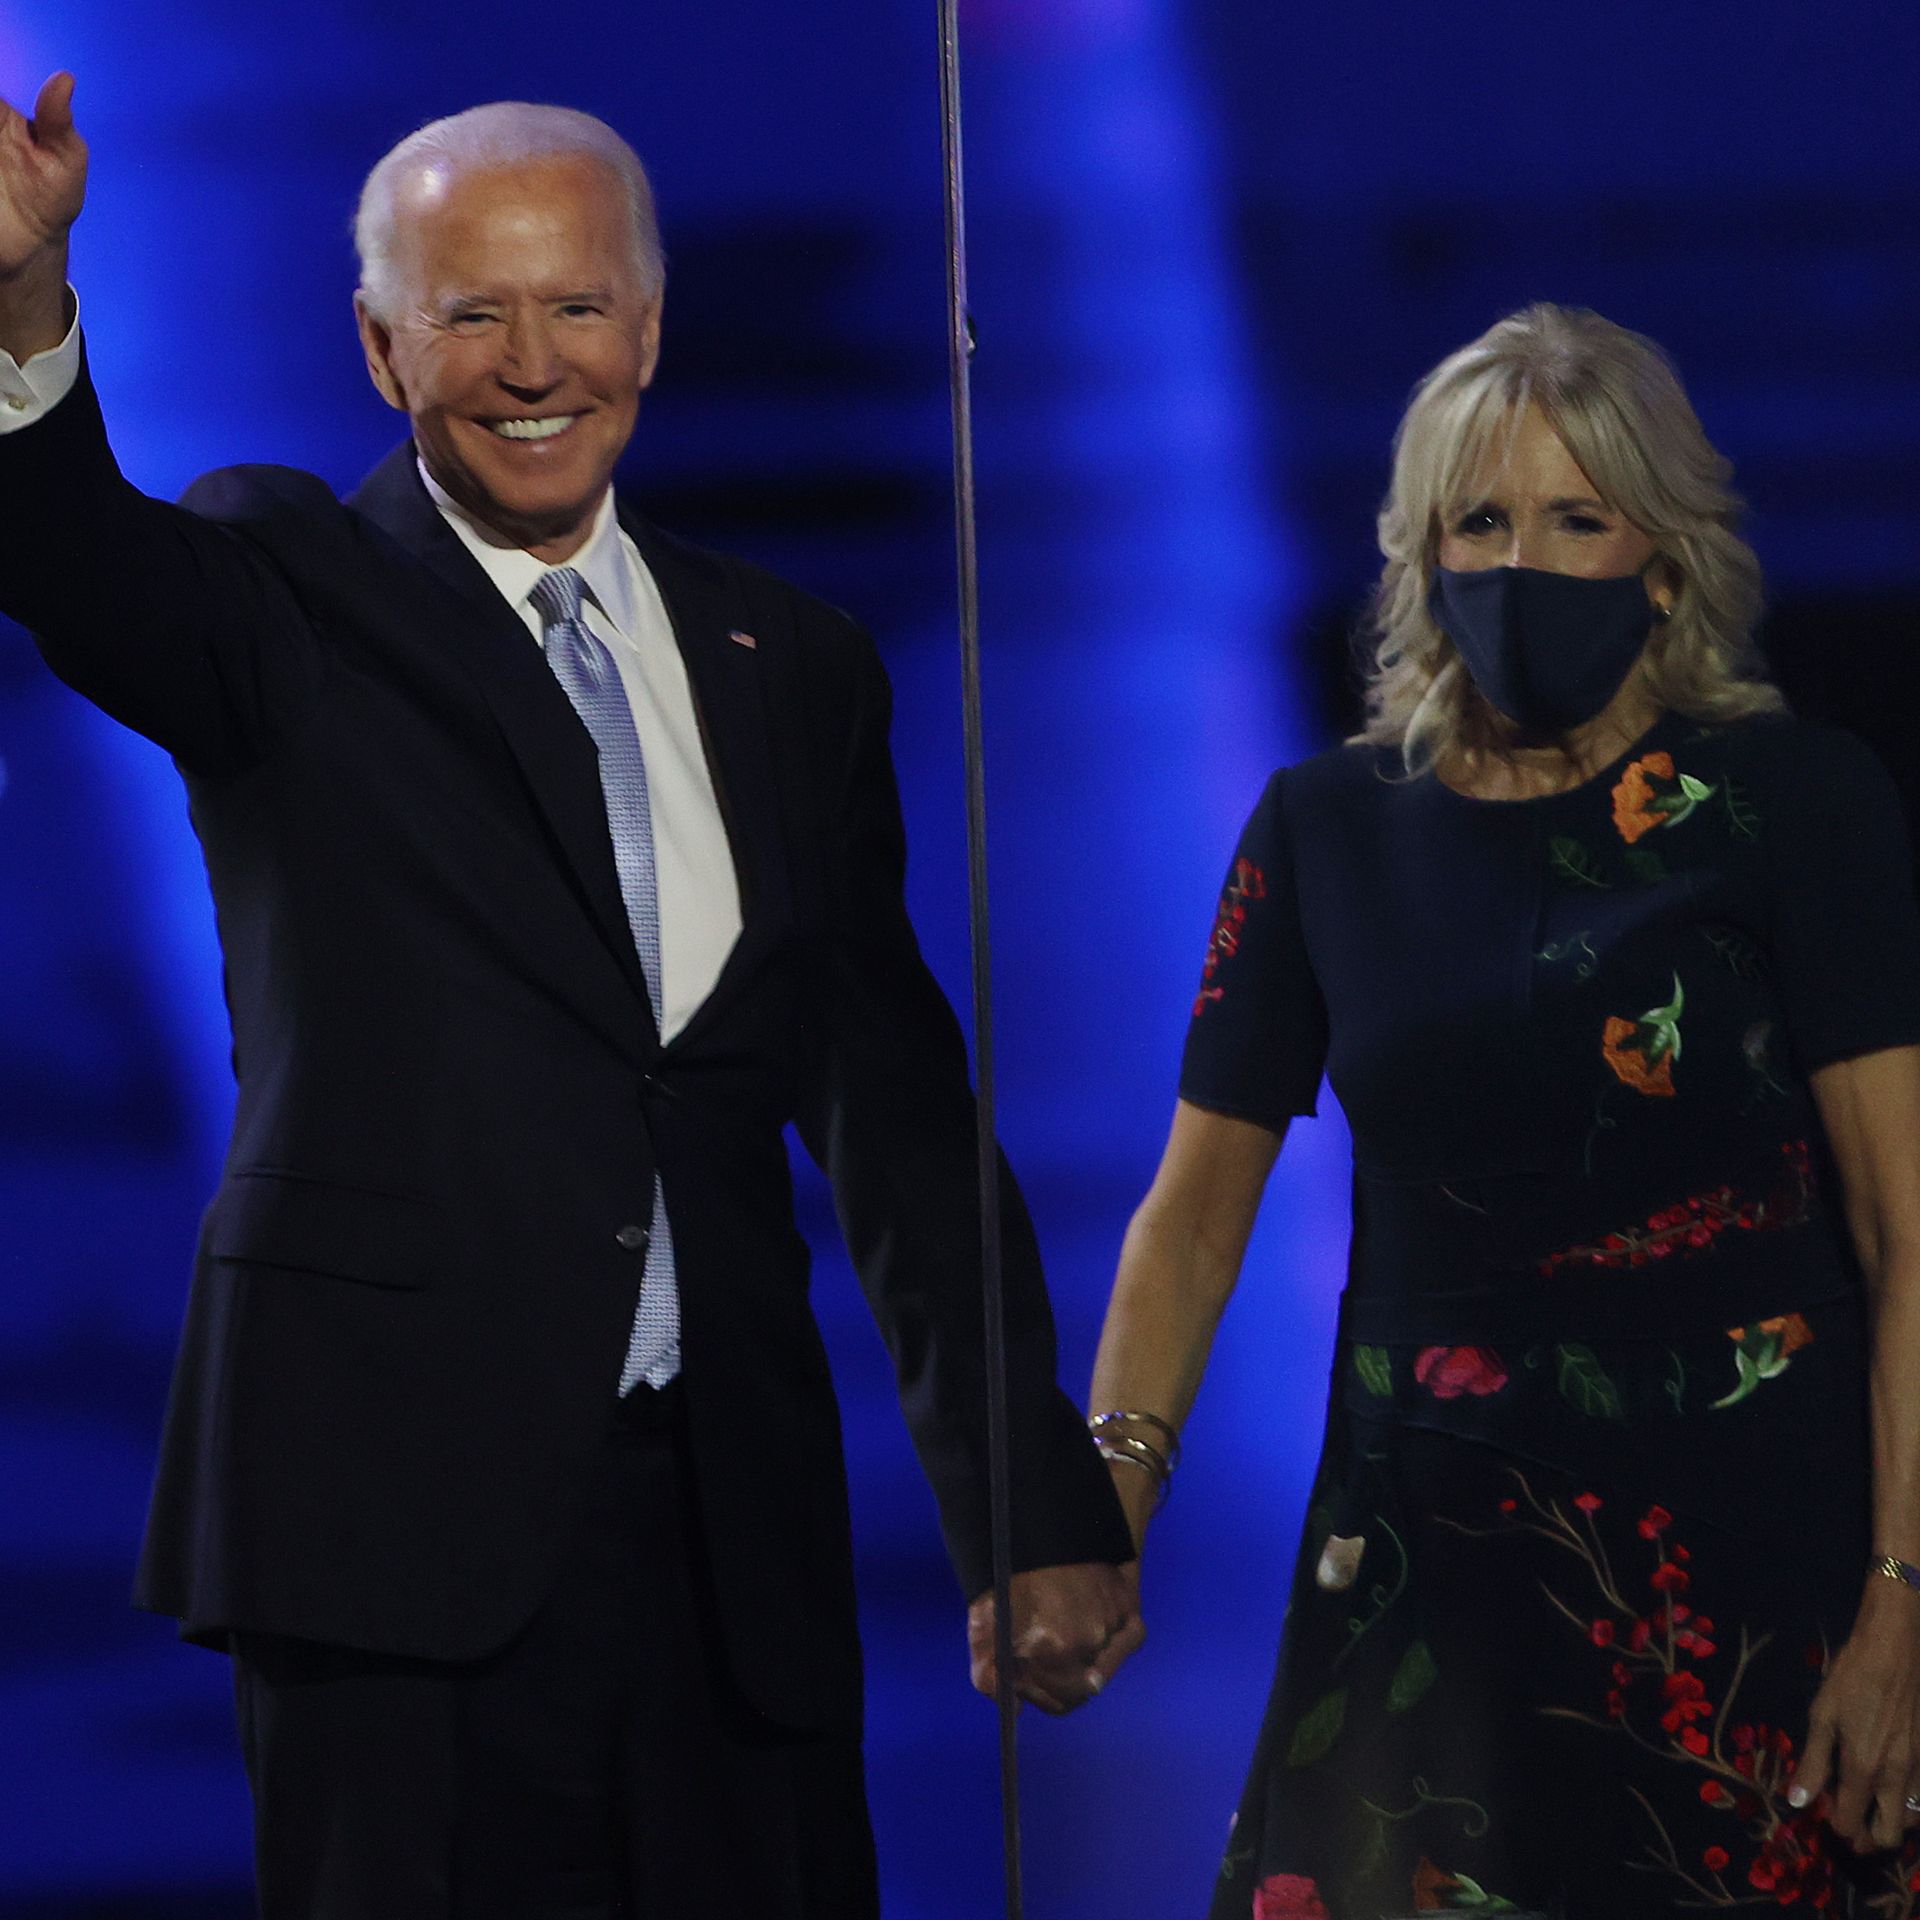 Joe Biden and his wife Dr. Jill Biden. Photo: Tasos Katopodis/Getty Images